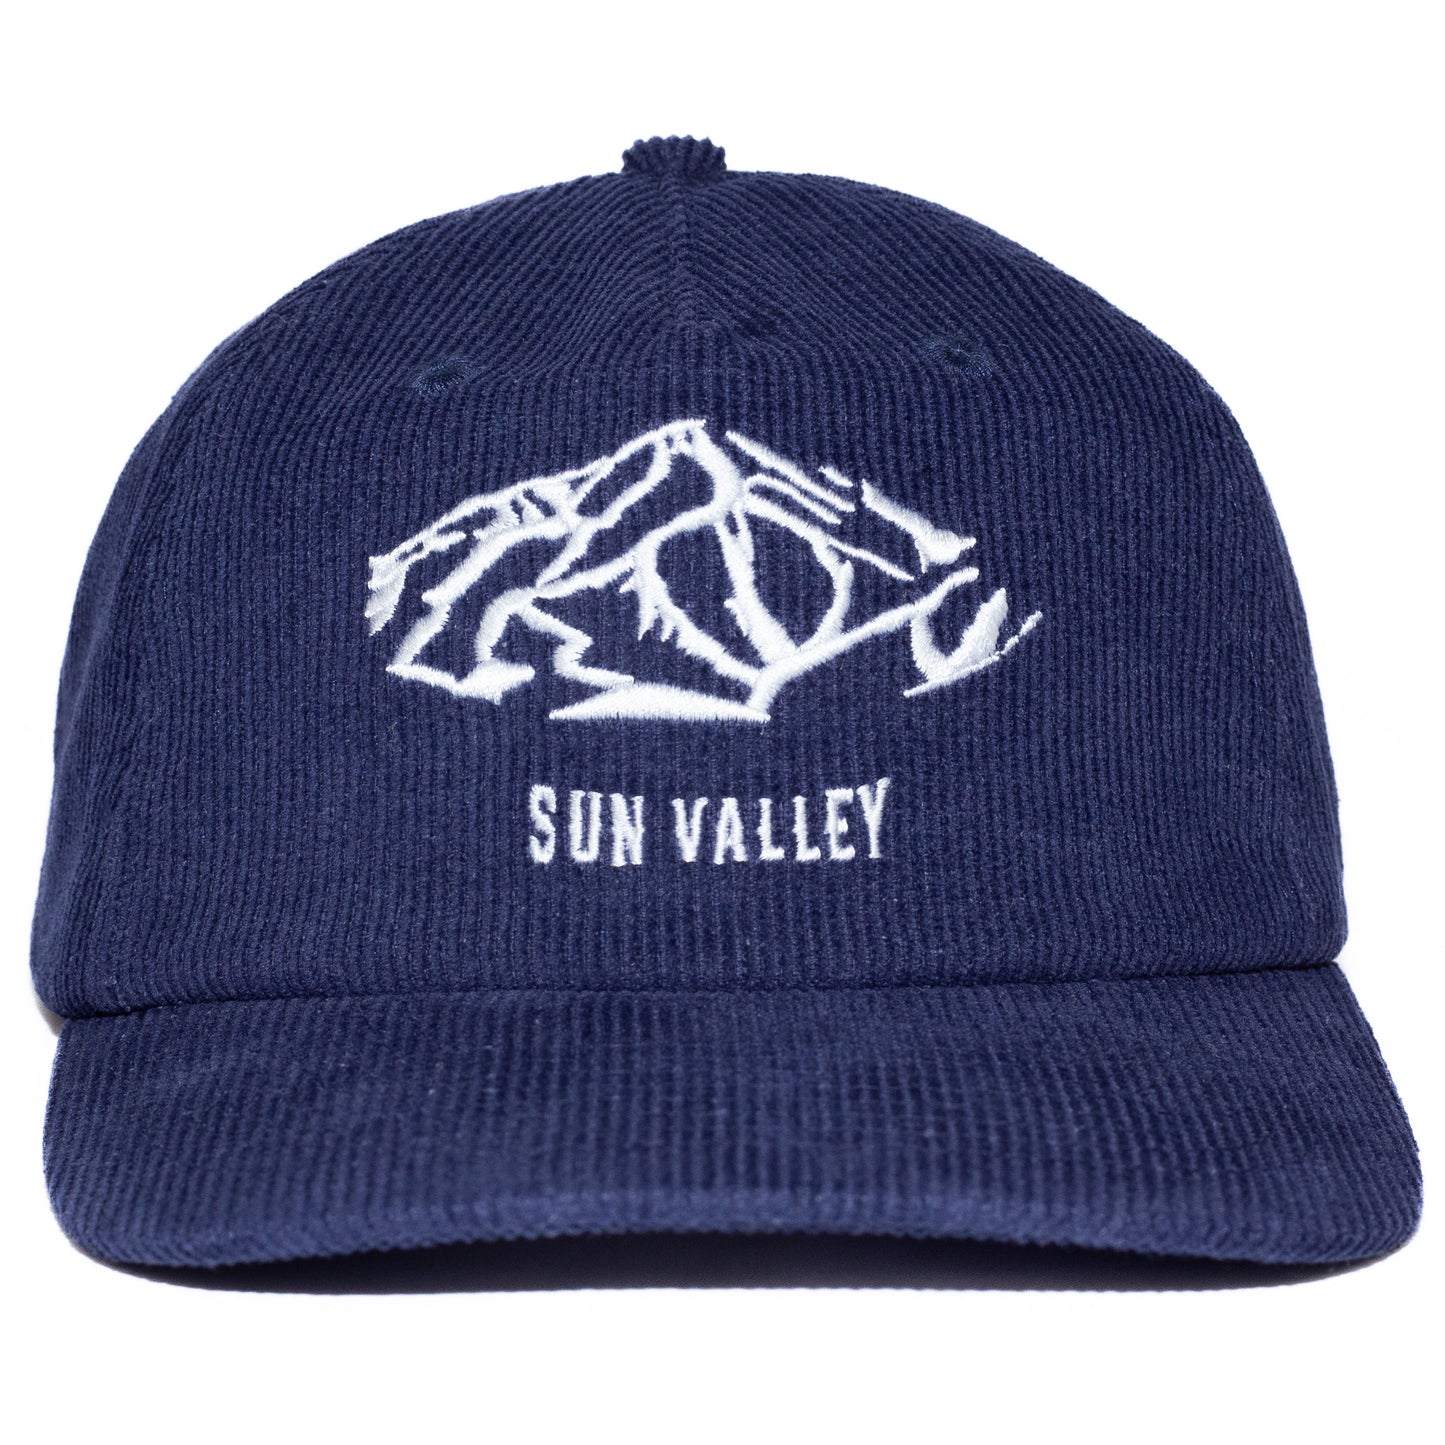 Sun Valley Cap - Navy